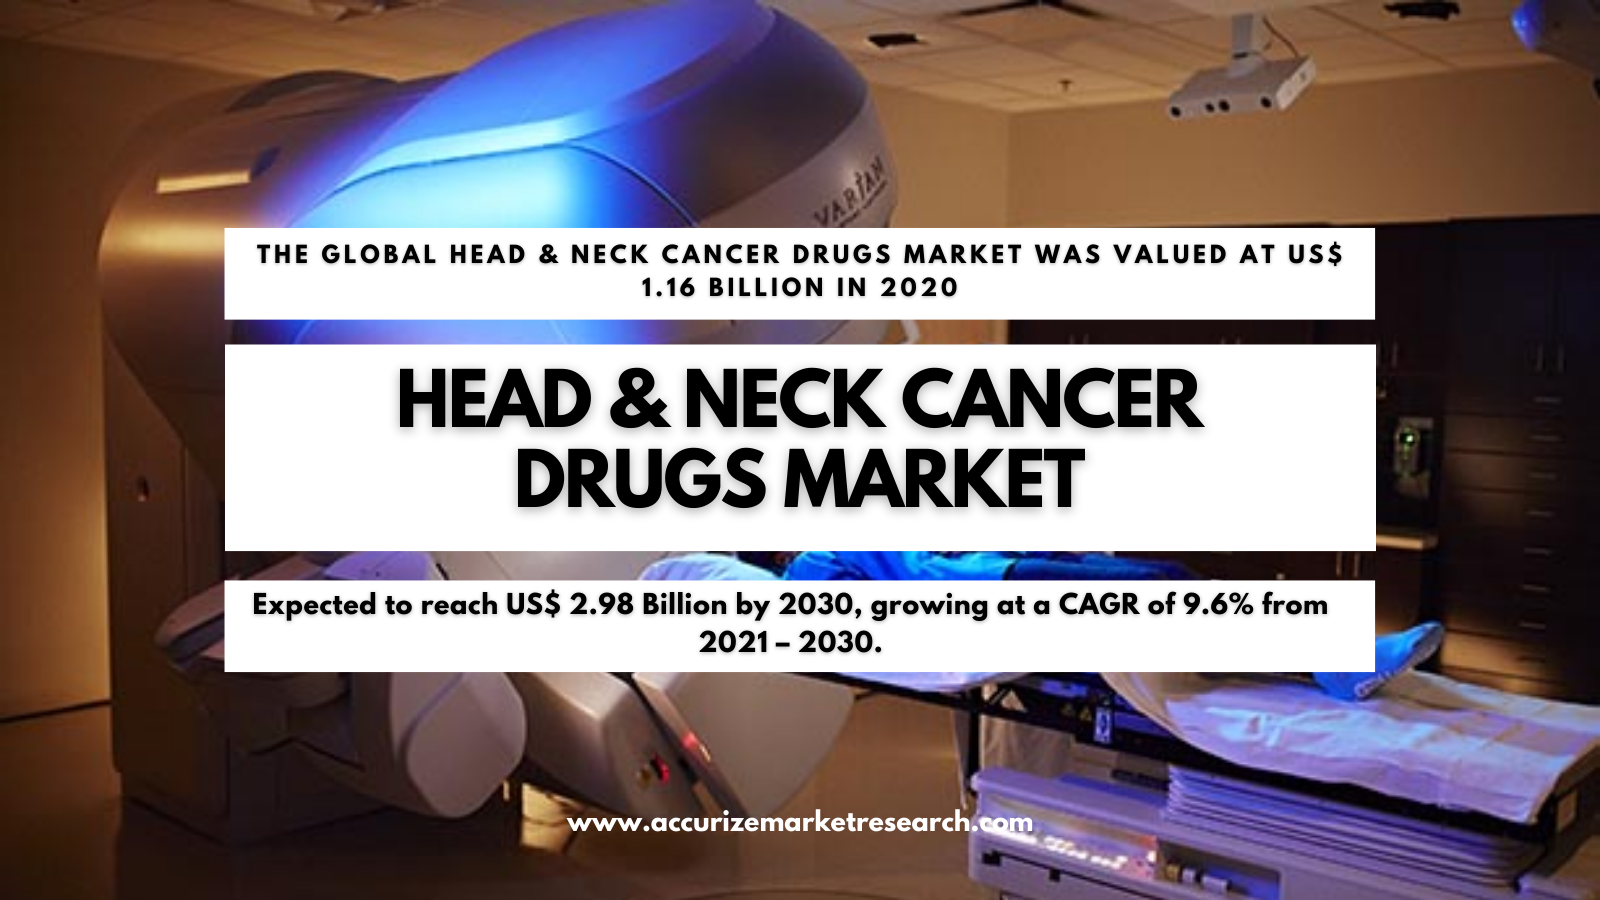 Head & Neck Cancer Drugs Market